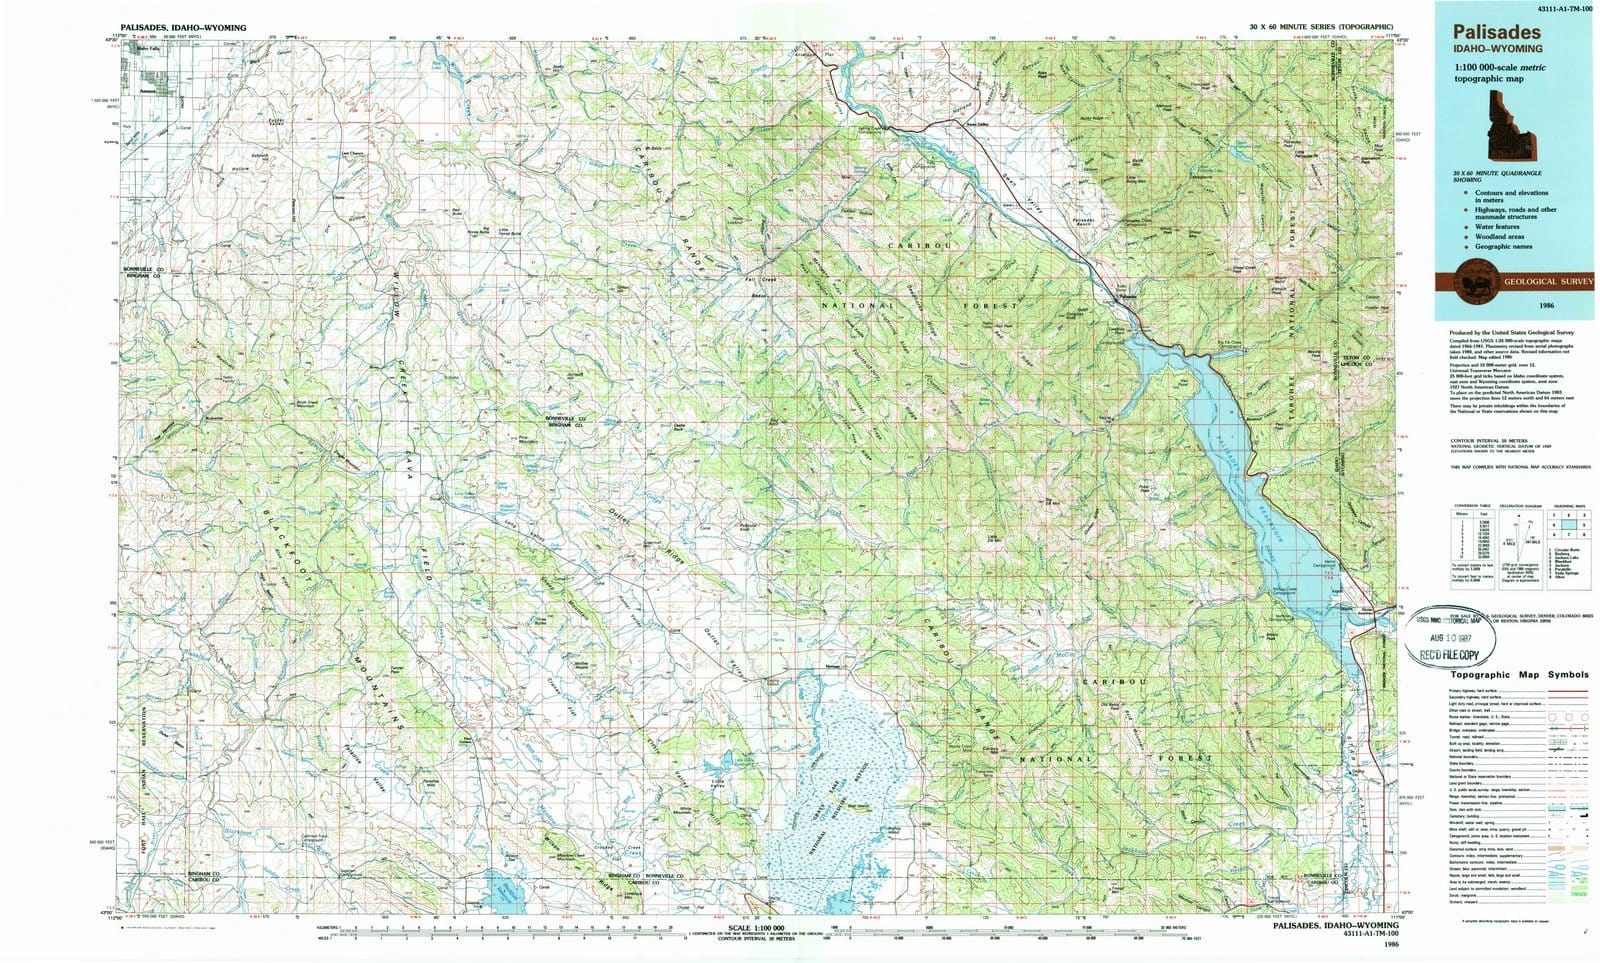 1986 Palisades, ID - Idaho - USGS Topographic Map